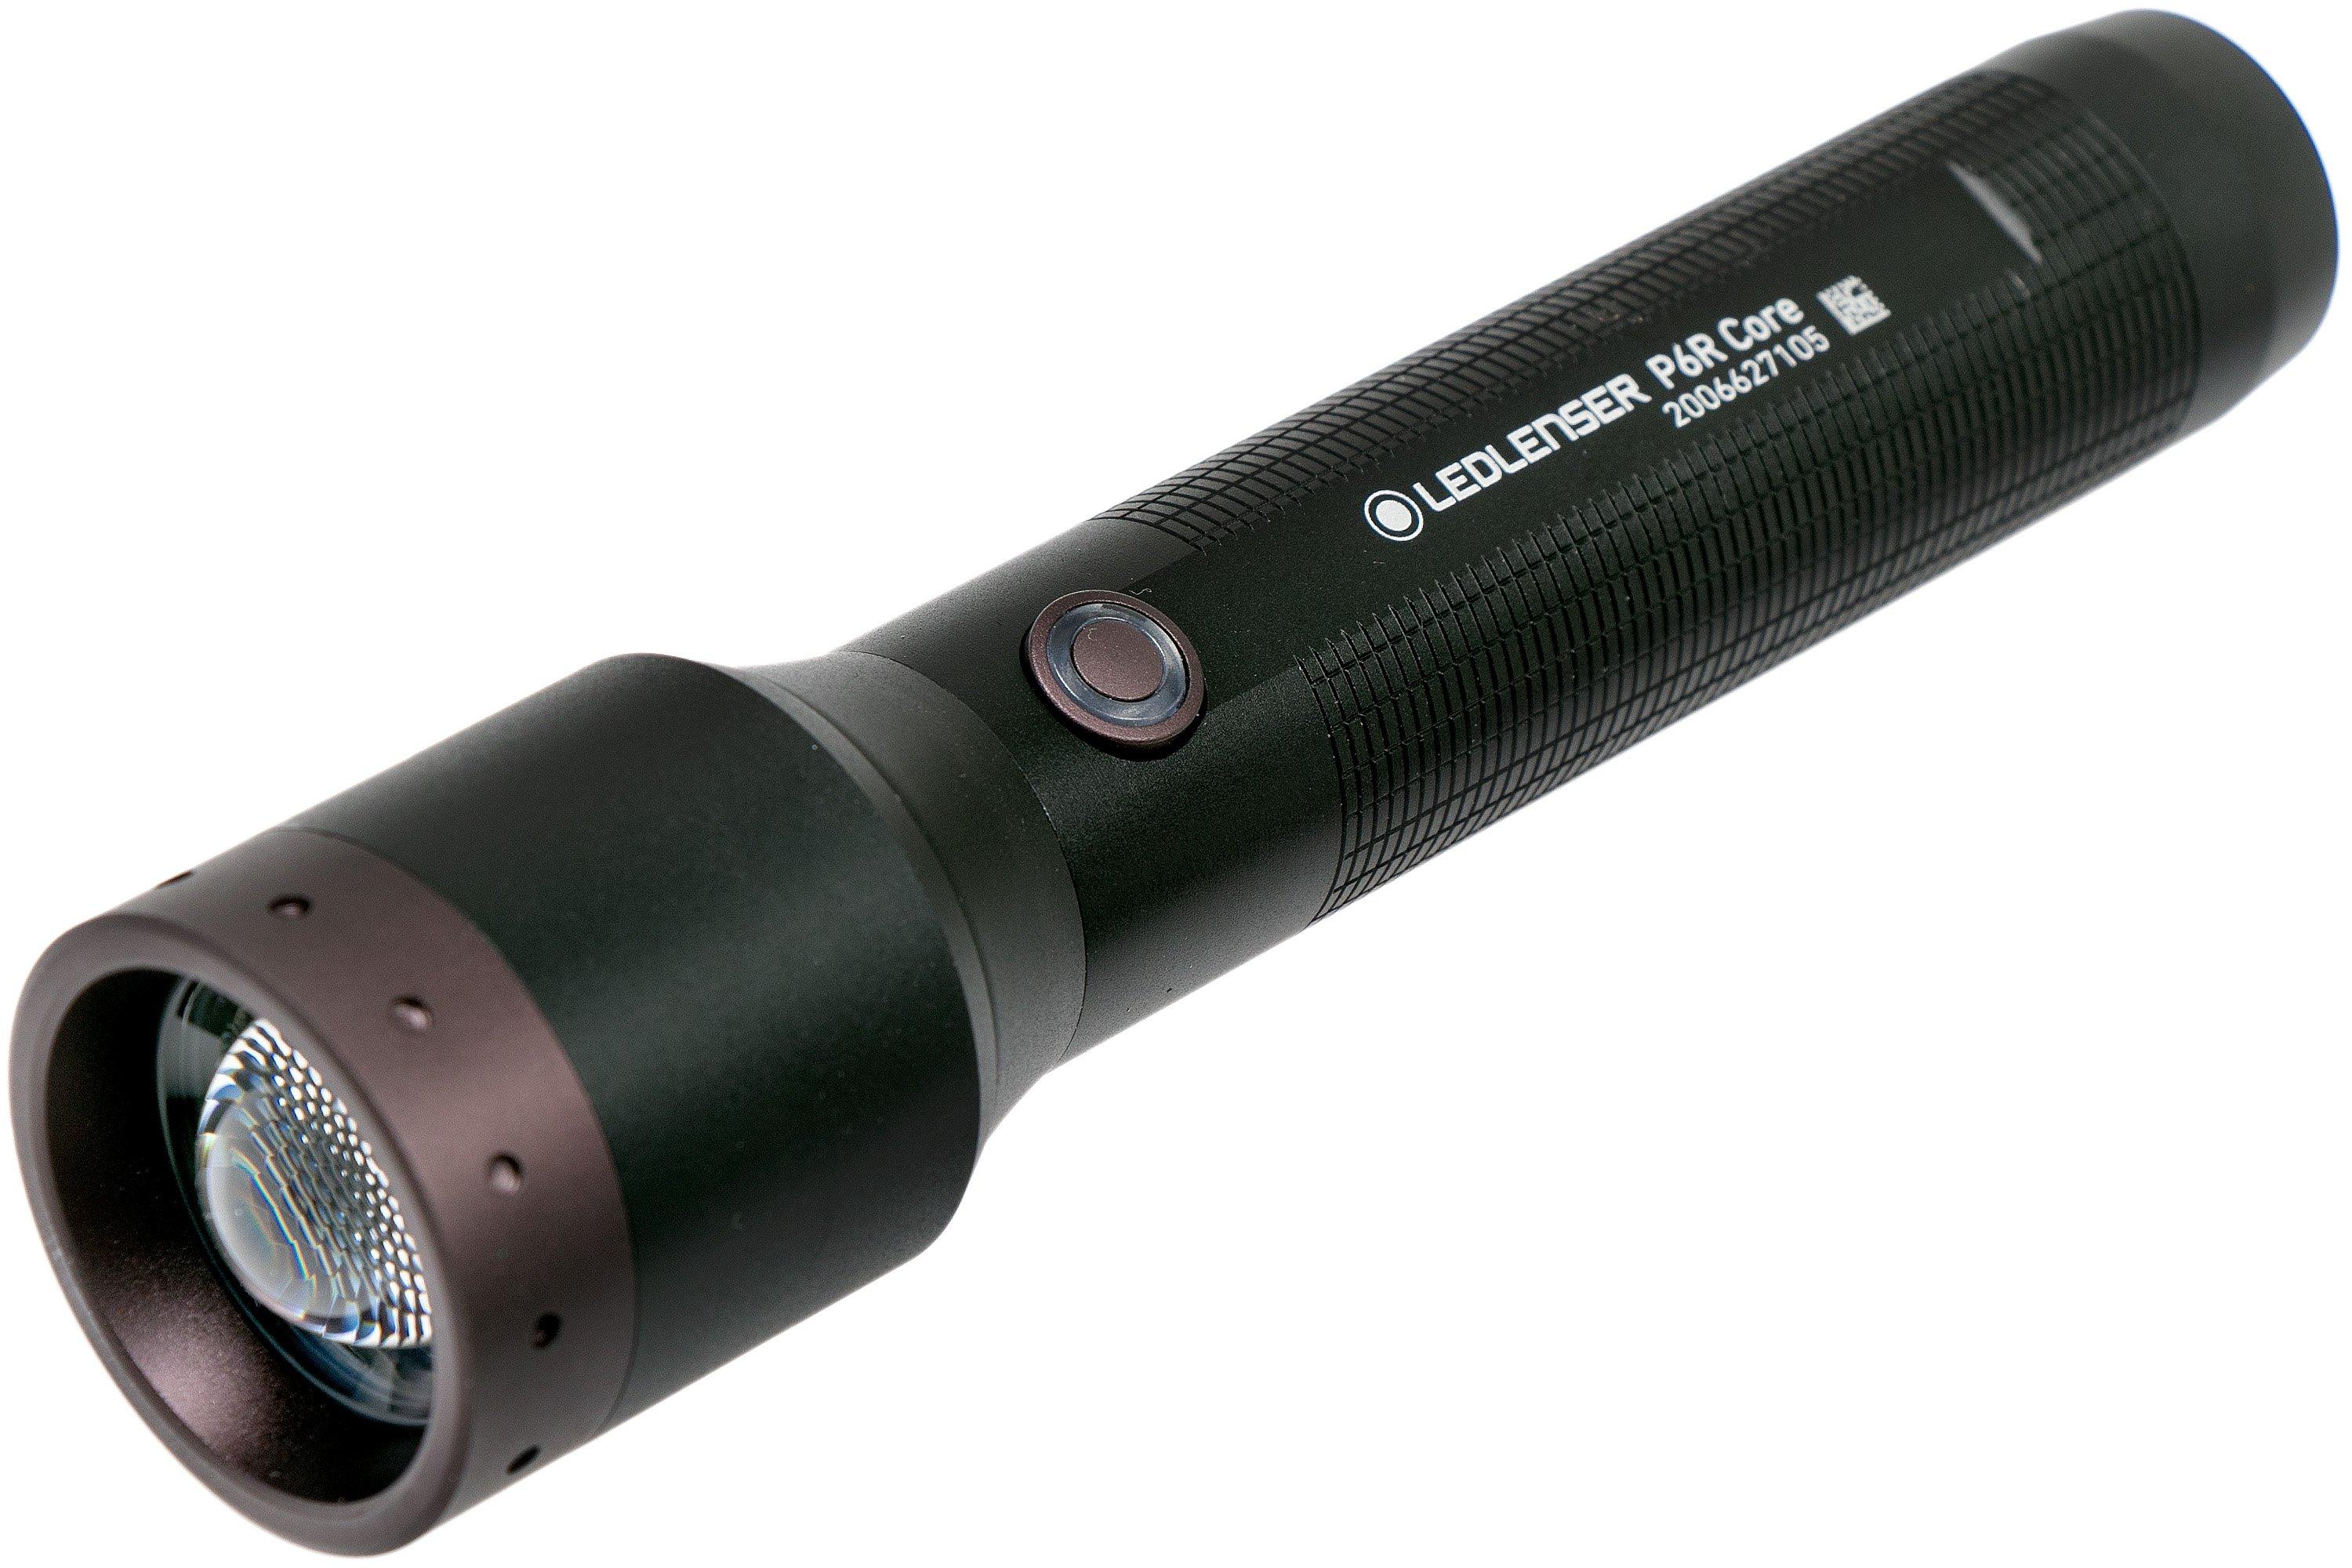 Ledlenser P6R Core rechargeable flashlight | Advantageously shopping at